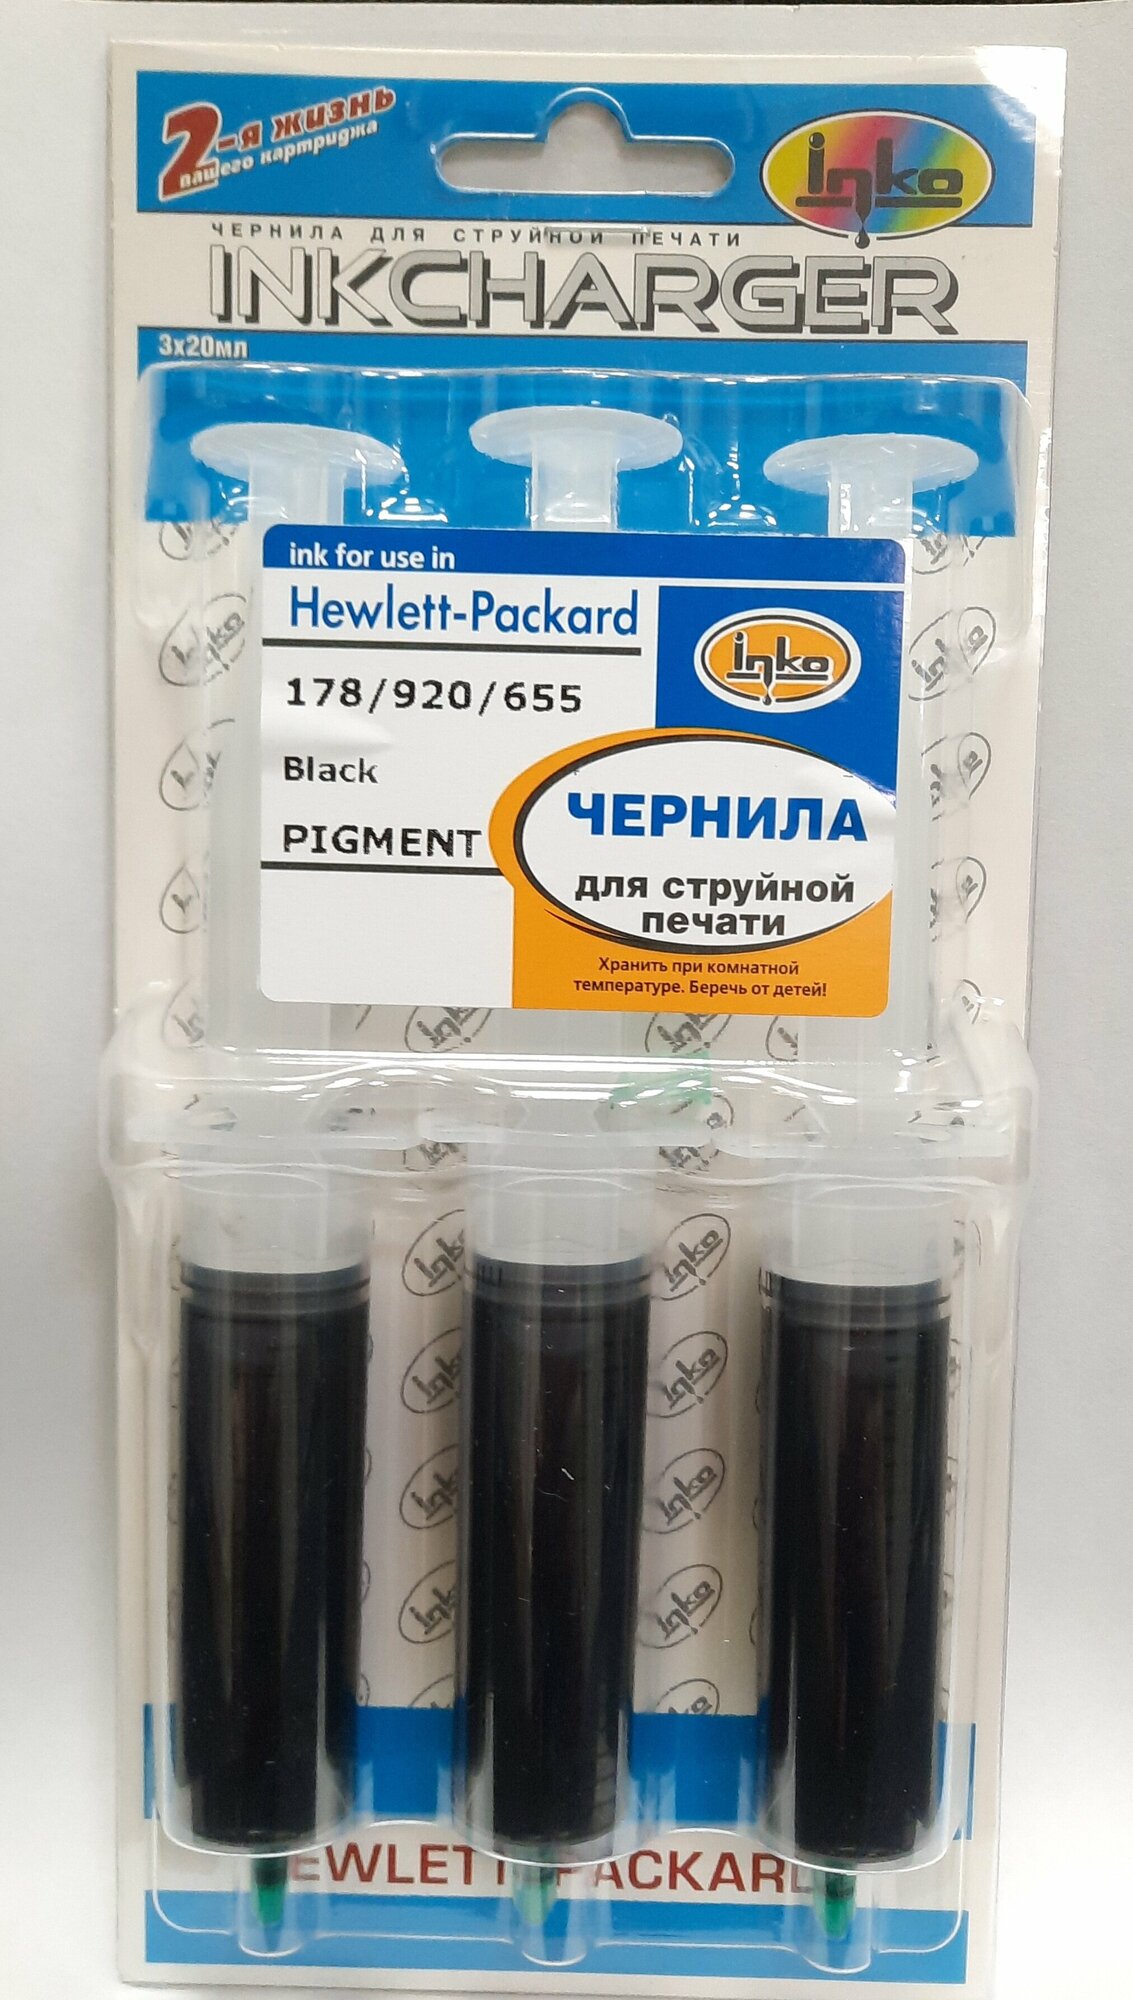 Заправочный комплект Inko, HP 178, 920, 655, Black Pigment, 3x20 мл.